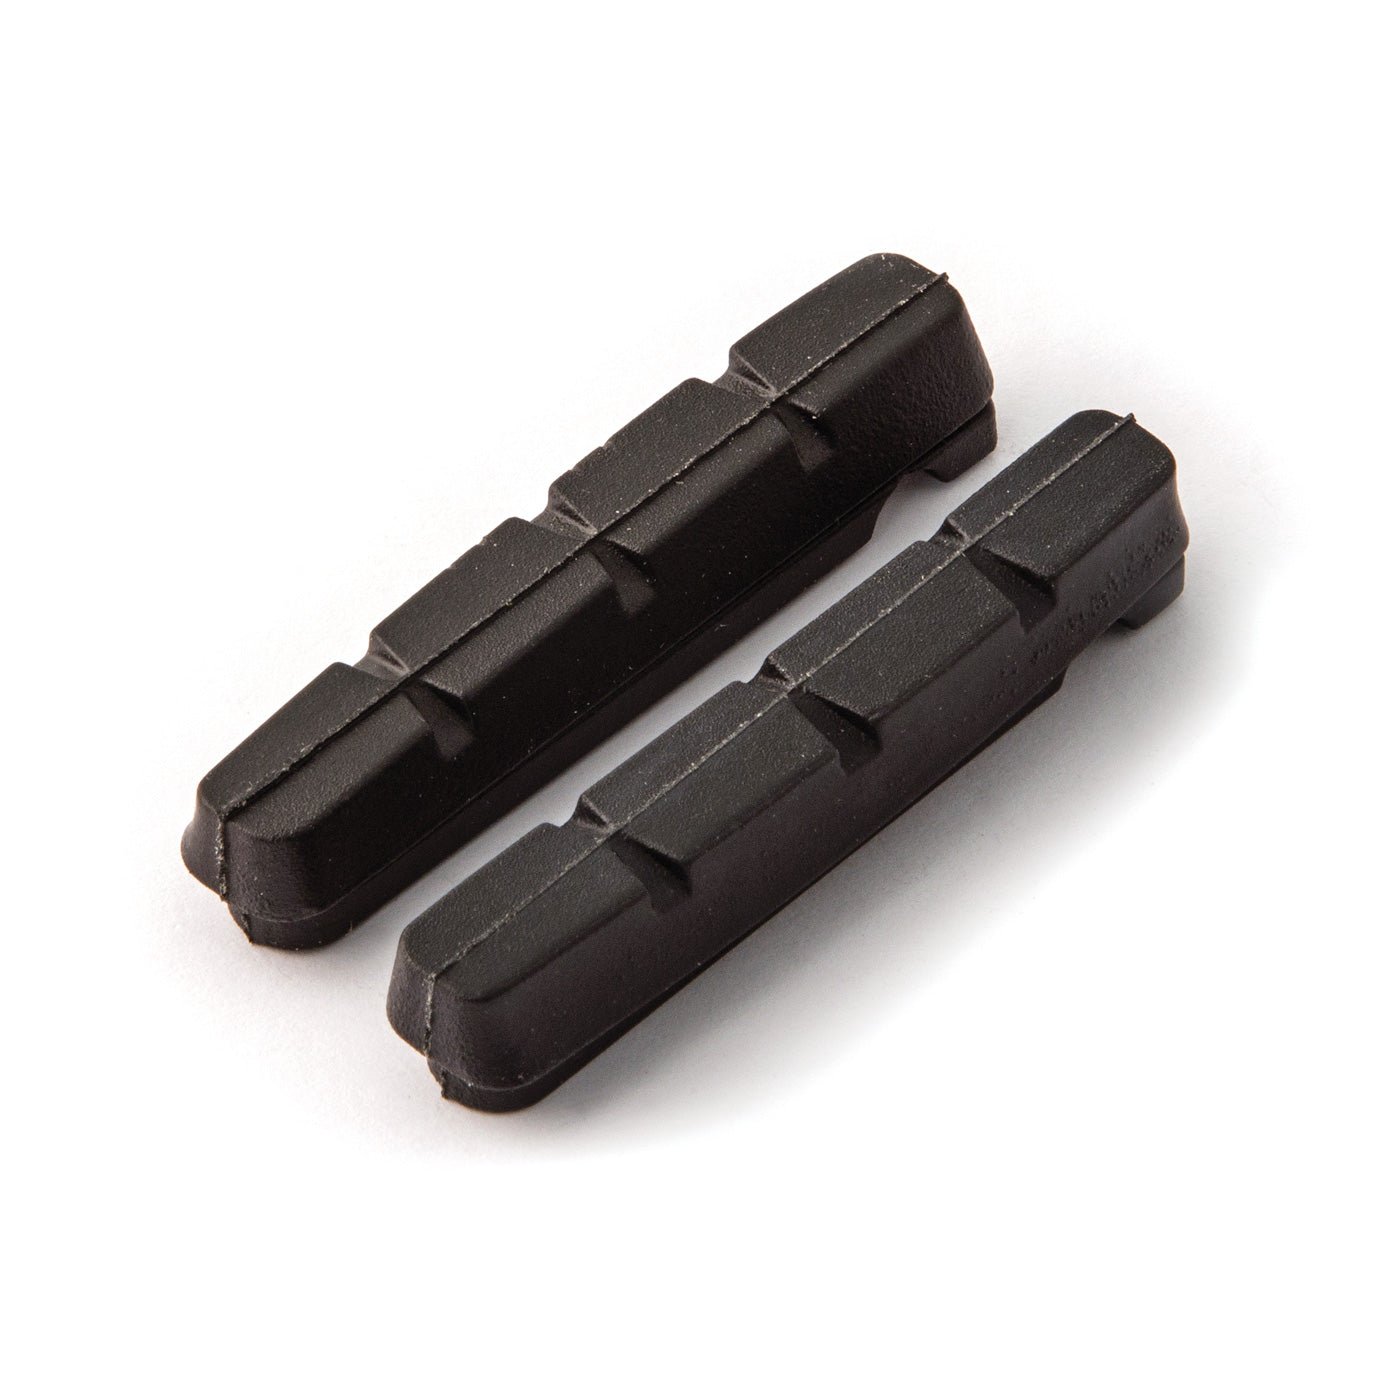 View Road brake pad replacement cartridges information